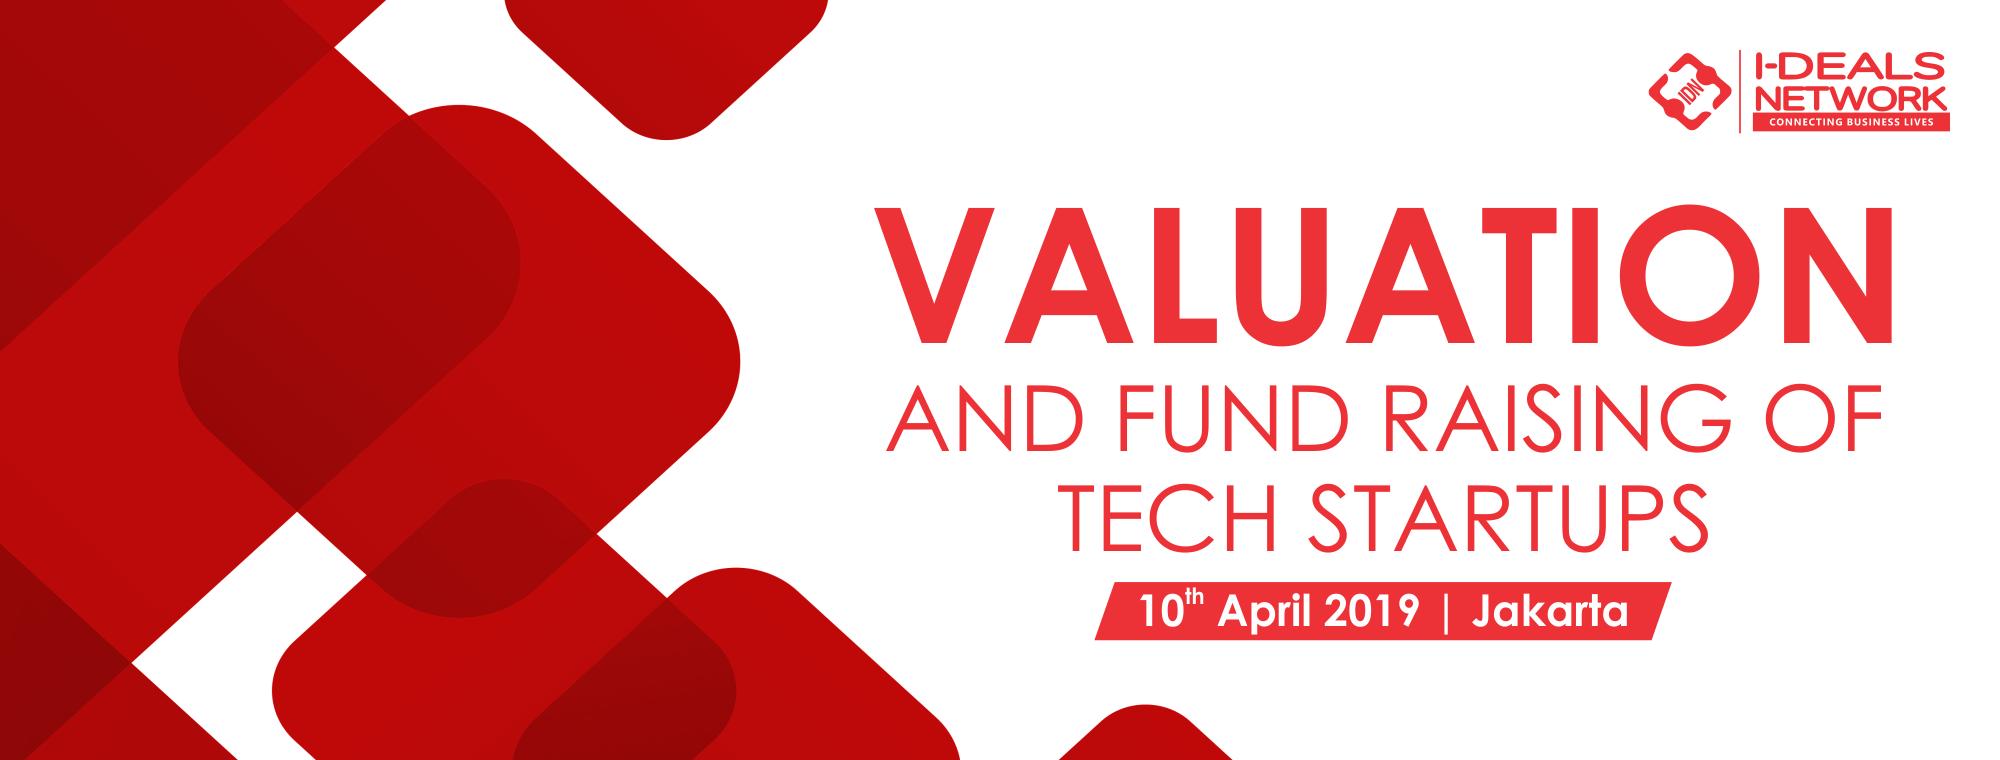 Valuation & Fund Raising of Tech Startups 10 April